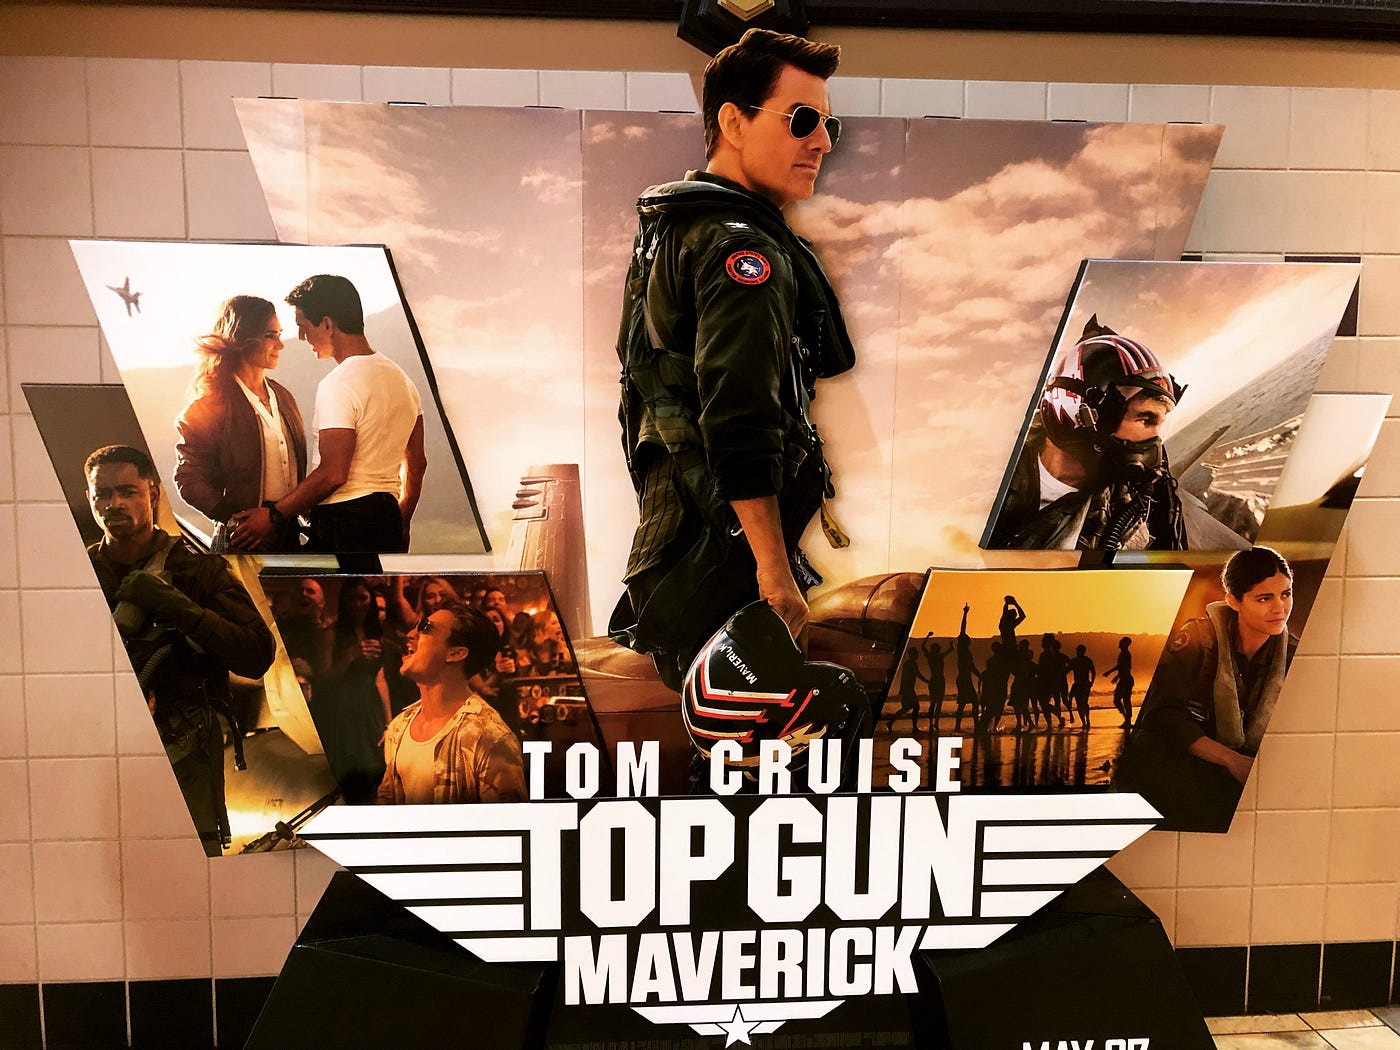 Never-Ending Reason 99% Top Gun: Maverick | by Joseph Serwach The Narrative |